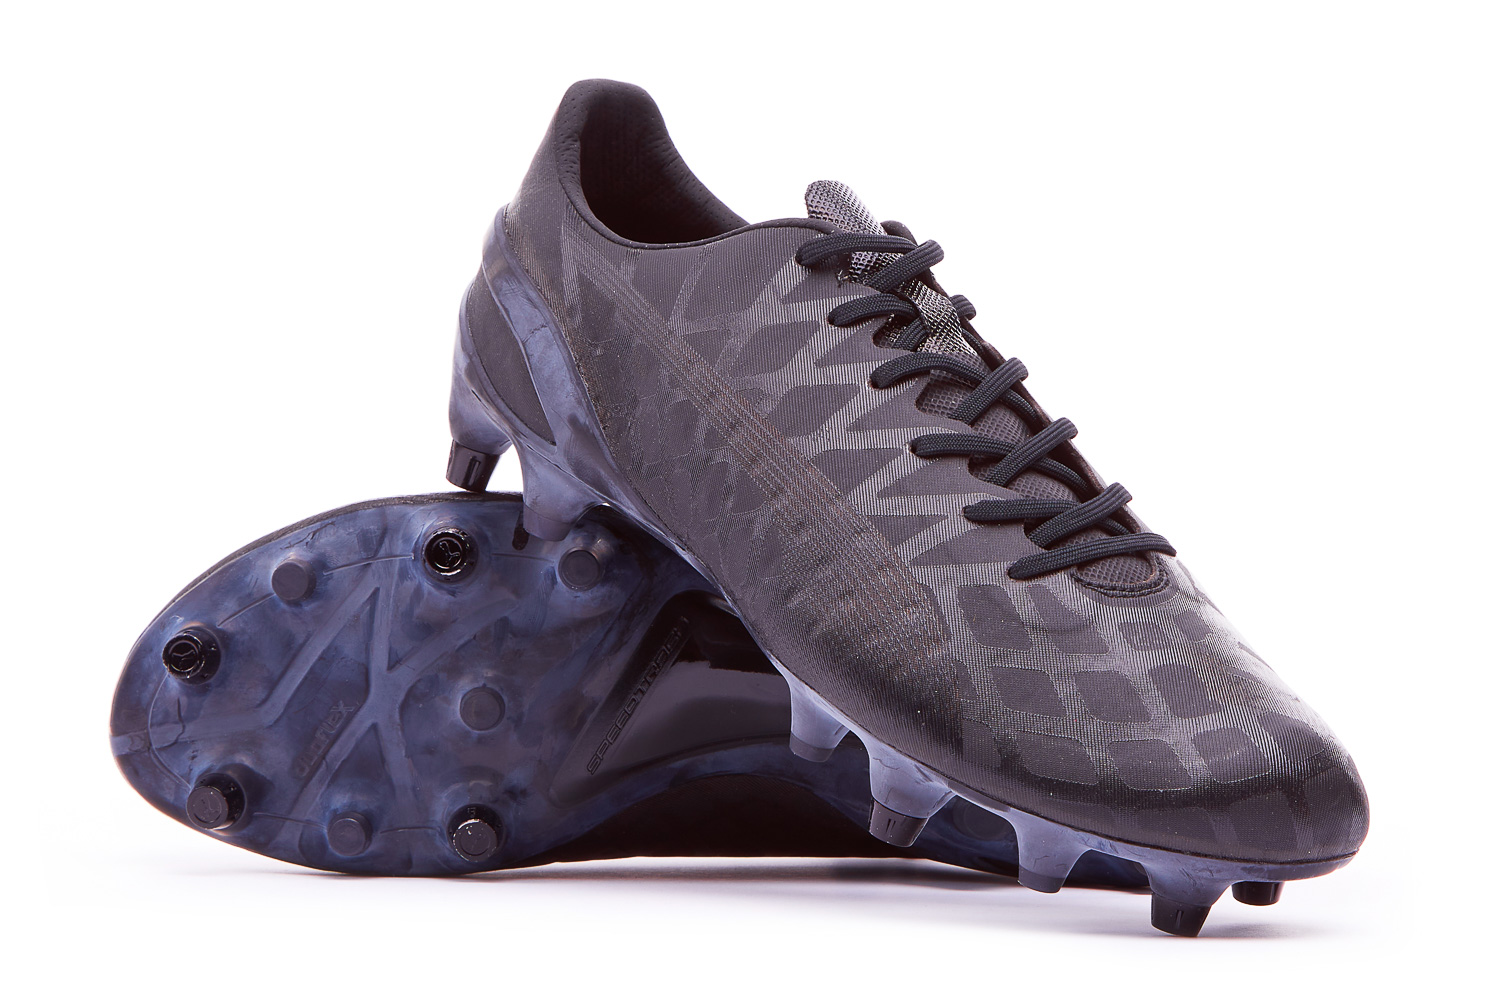 2015 Puma Player Issue EvoSPEED SL Pro Football Boots *In Box* SG